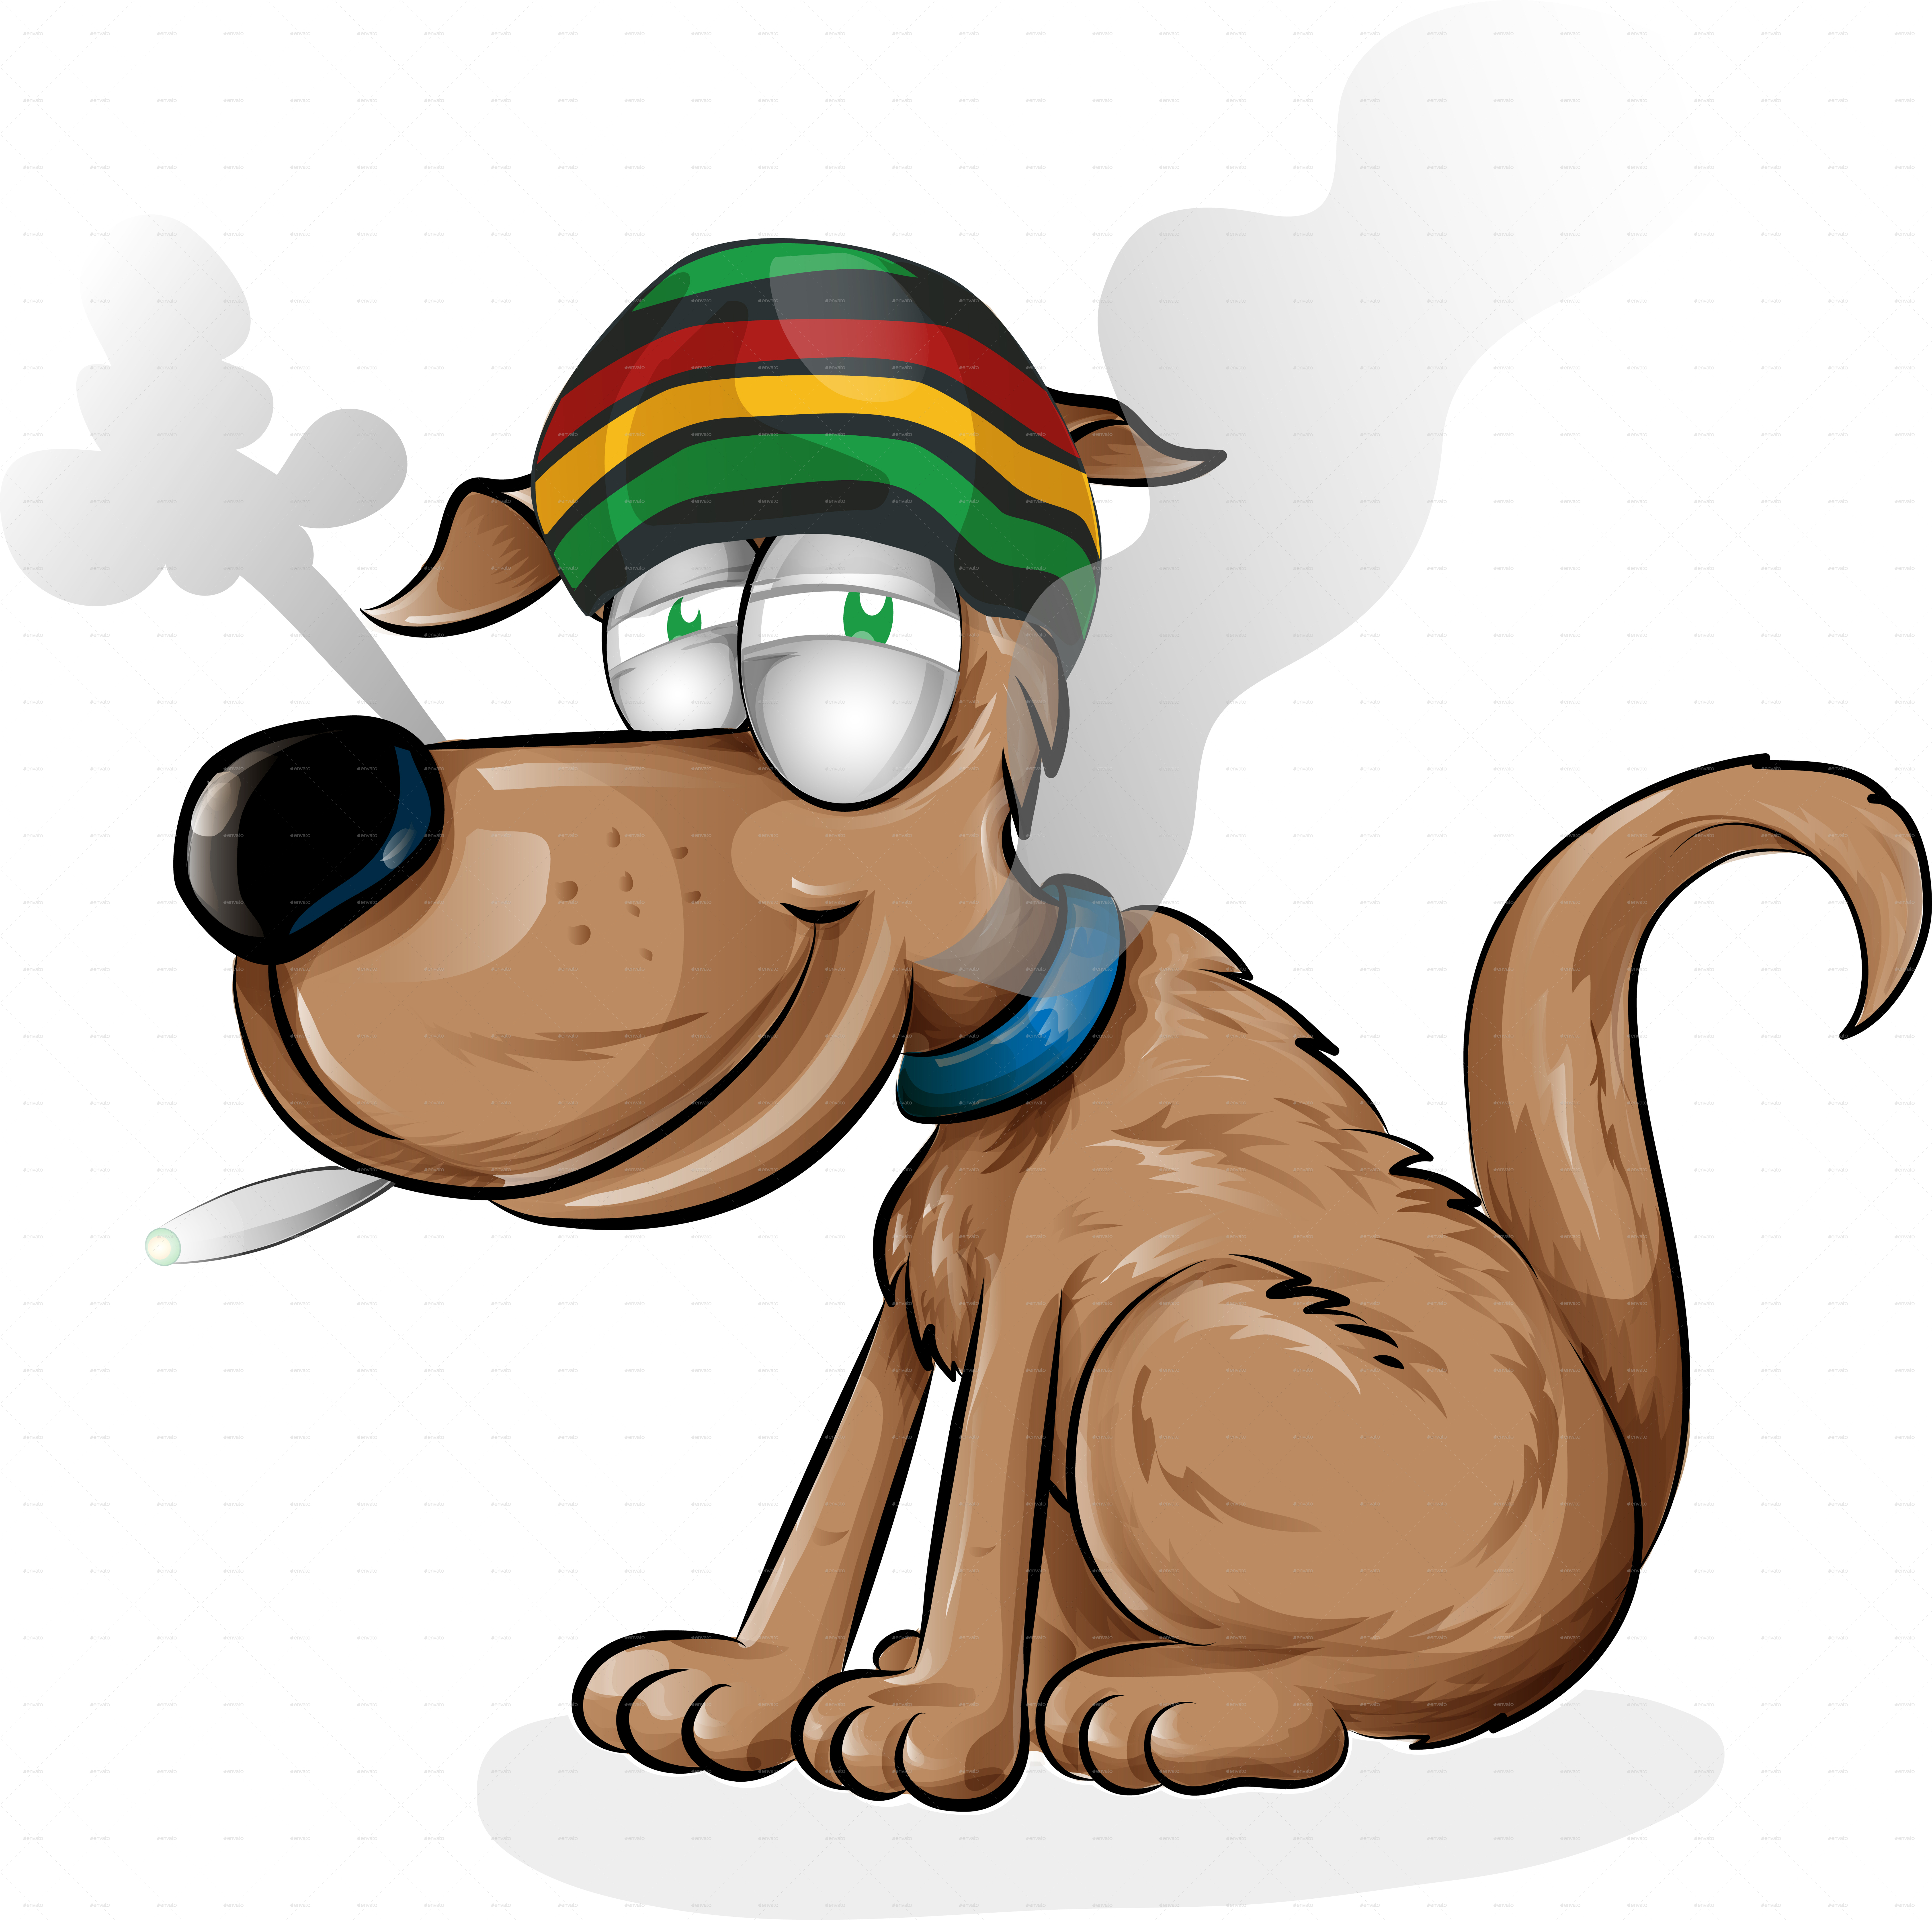 6 Jamaican Character Mascot Cartoon With Marijuana Cigarette by doomko